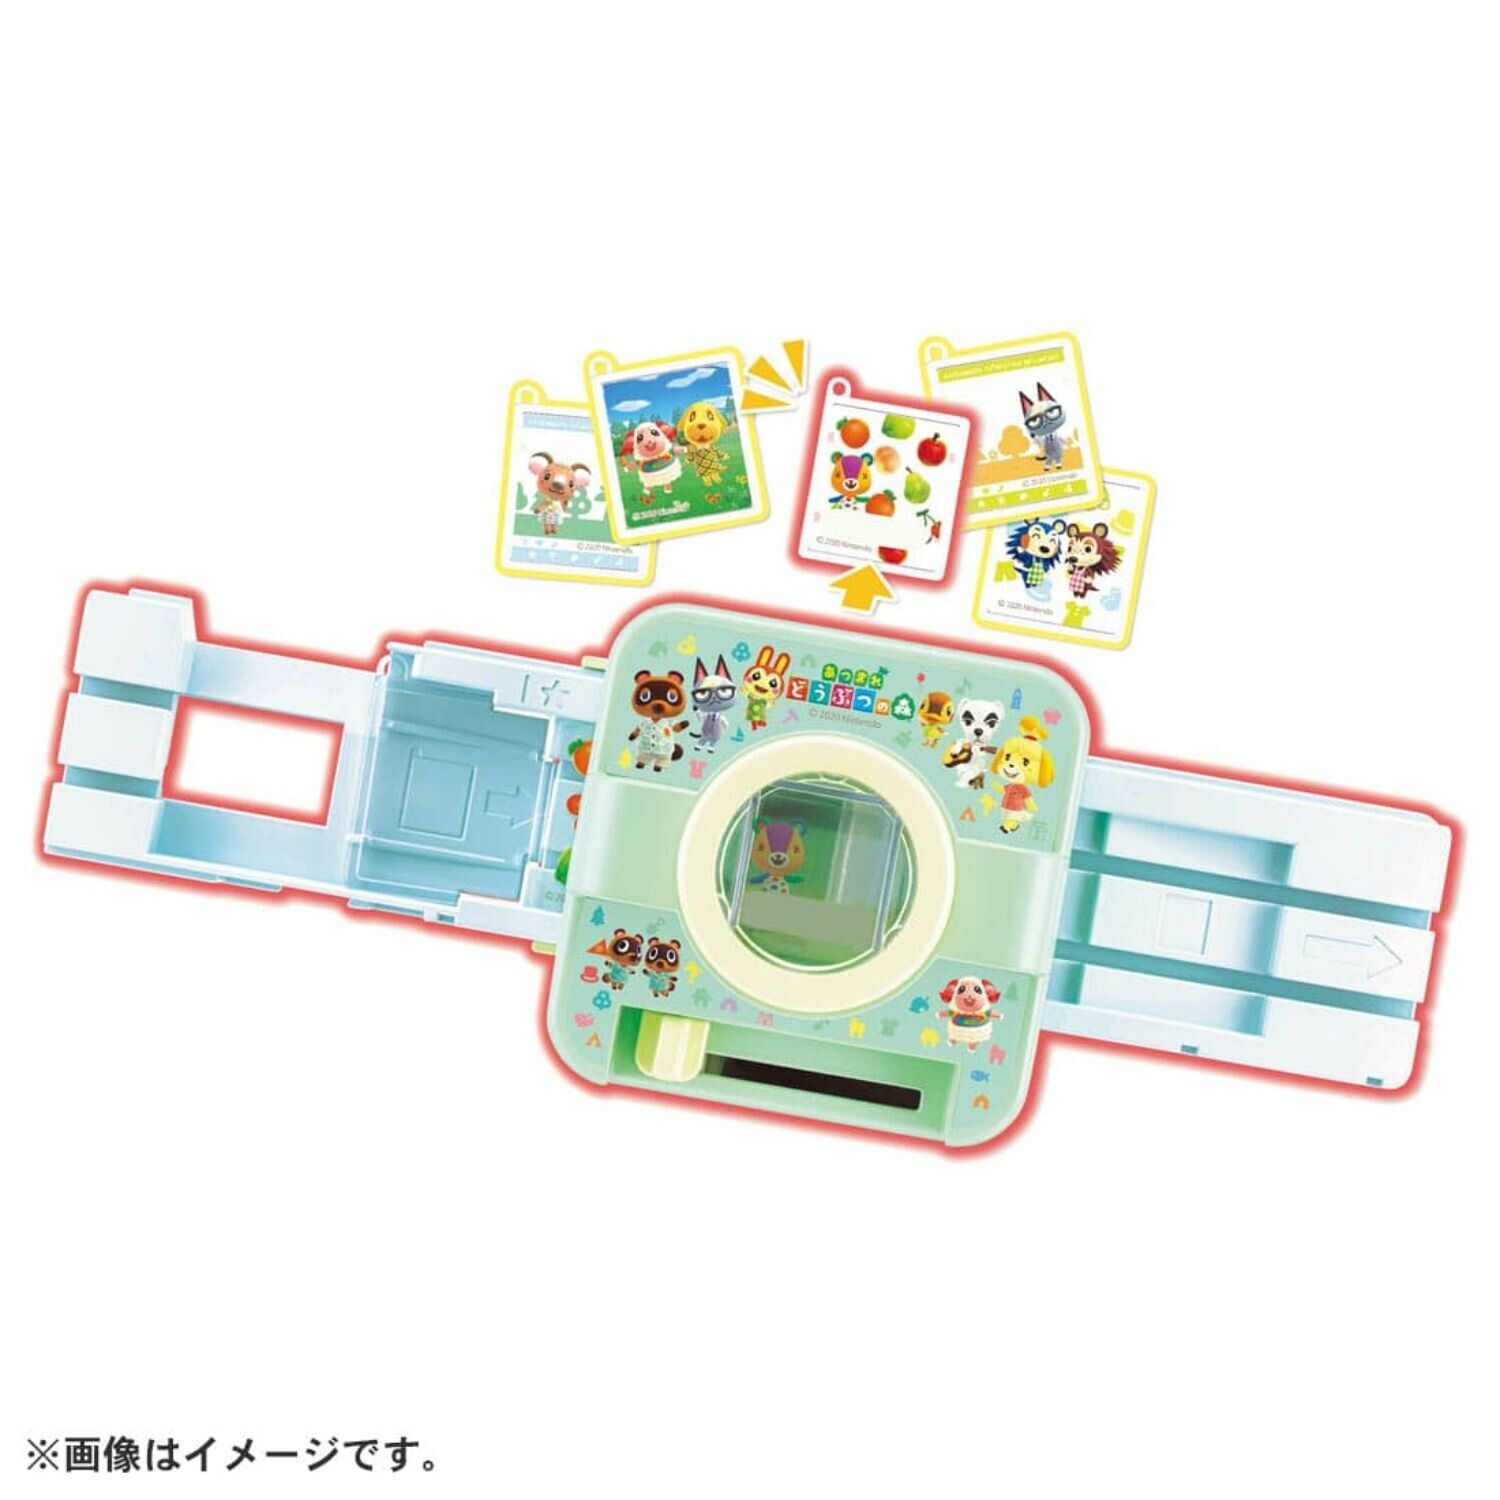 Takara tomy Animal Crossing Horizon Milfy Charm Shot charm making toys / Japan